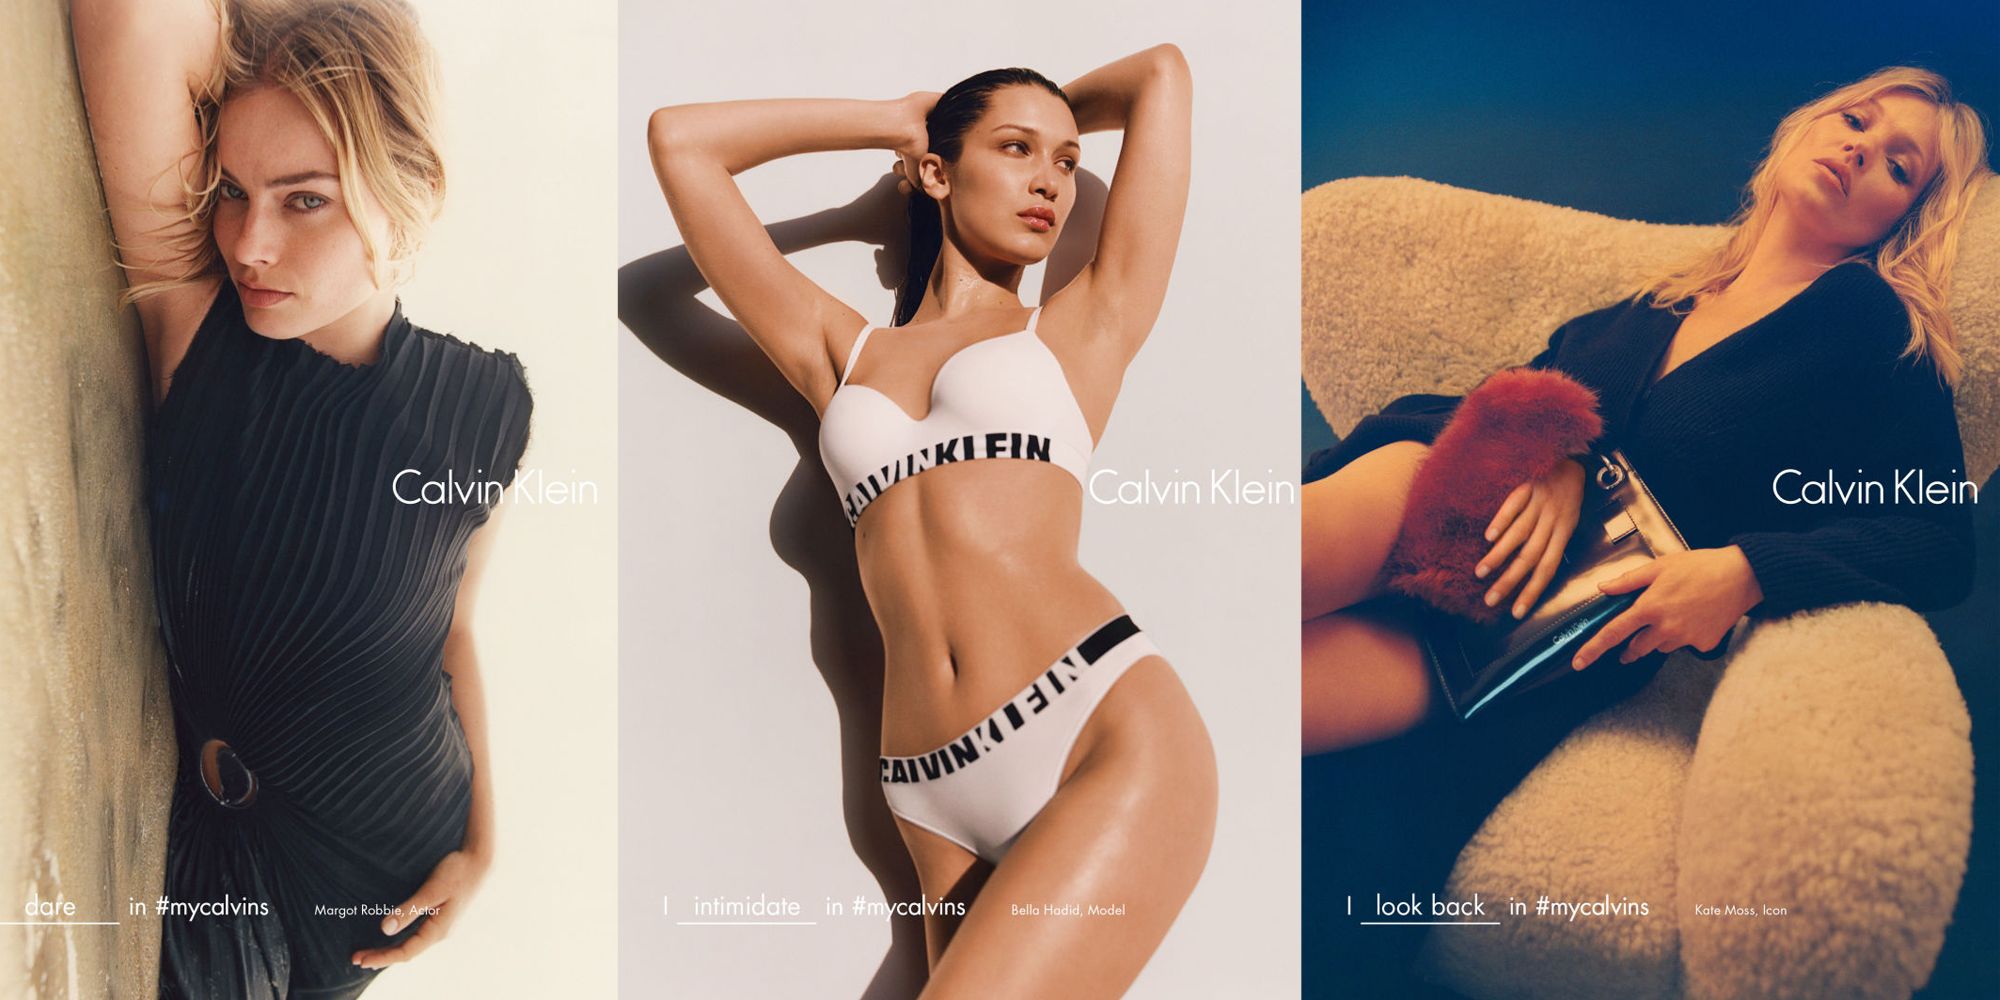 Calvin Klein, Reimage Thong, Thong Briefs